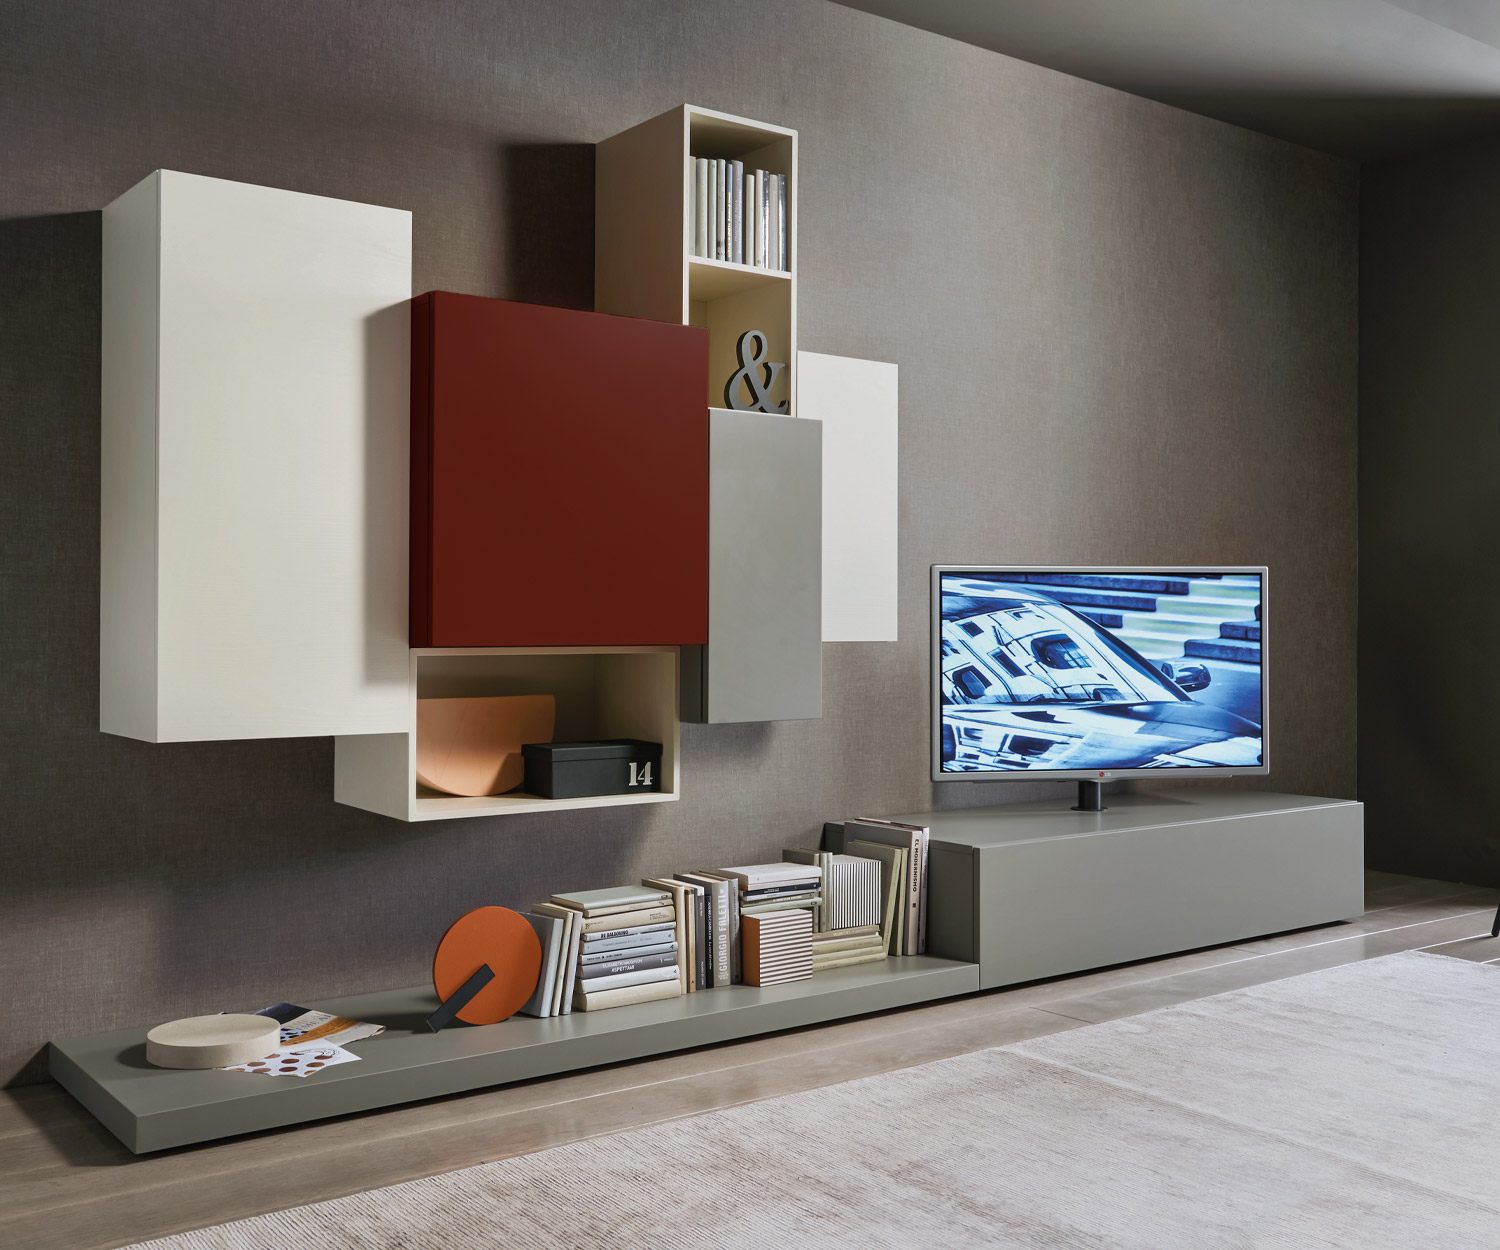 Meuble-paroi design minimaliste C49 avec armoires suspendues et lowboard design plus support TV